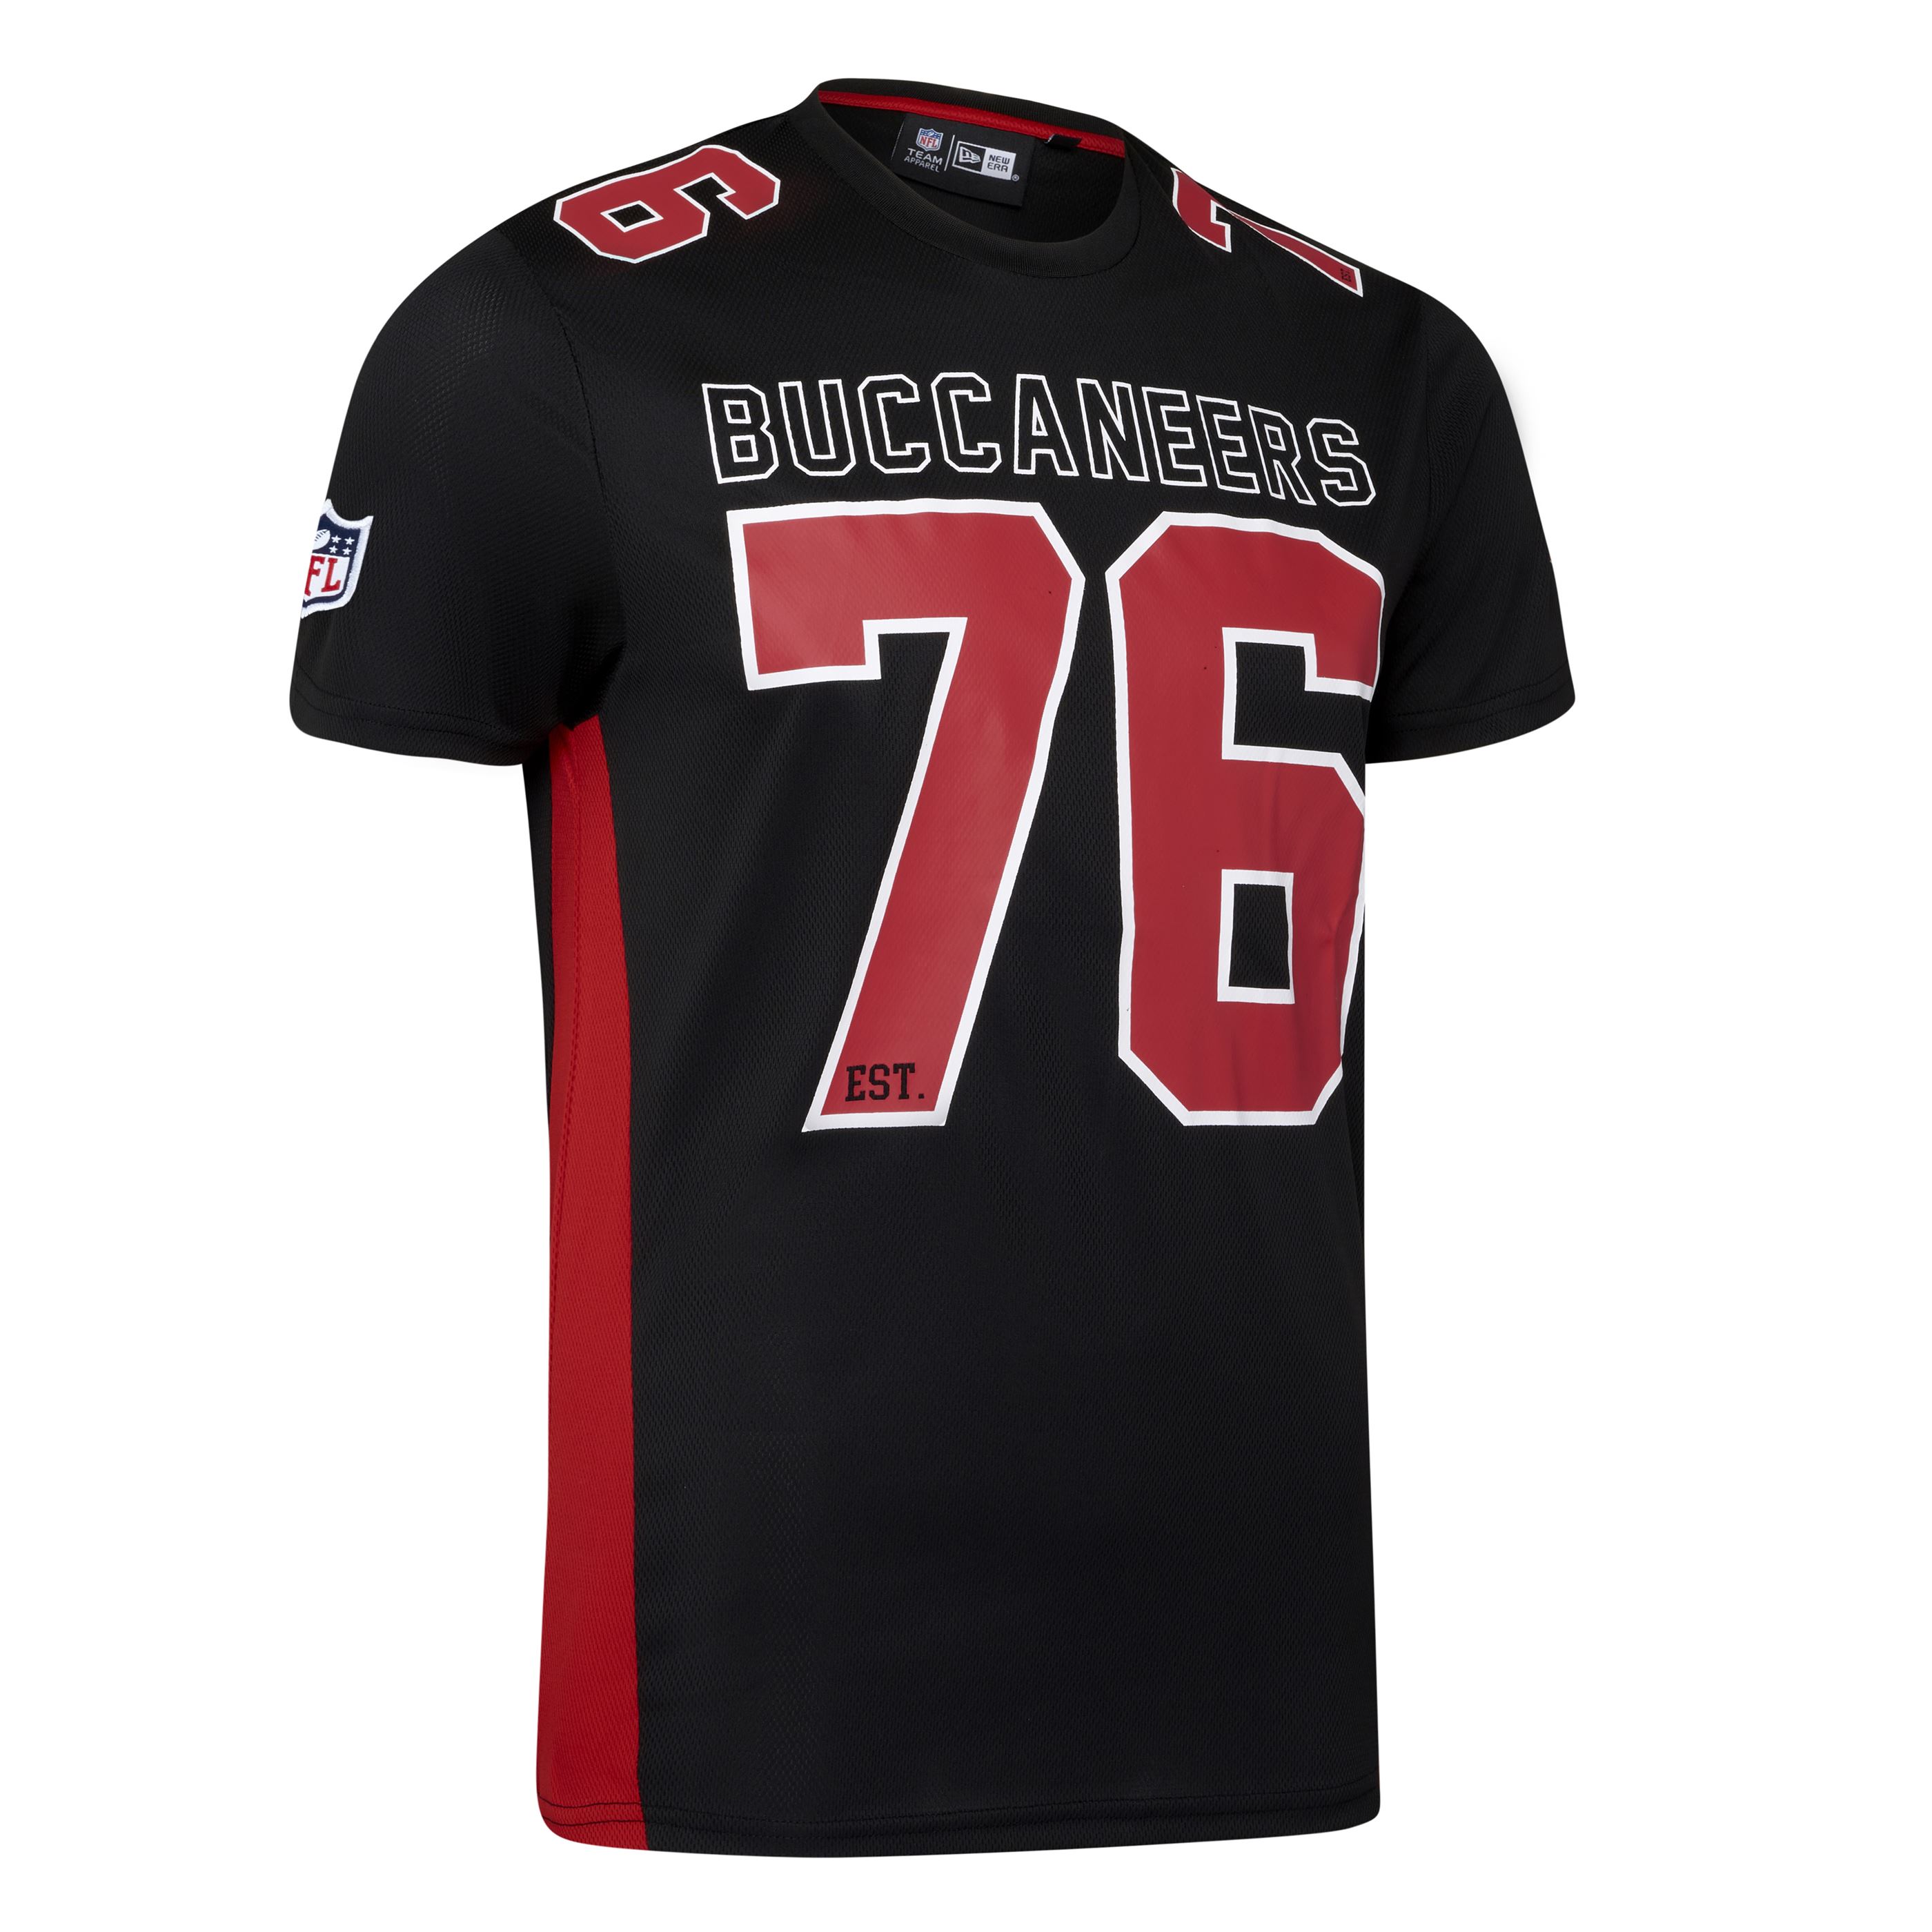 Tampa Bay Buccaneers NFL Established Number Mesh Tee Black T-Shirt New Era